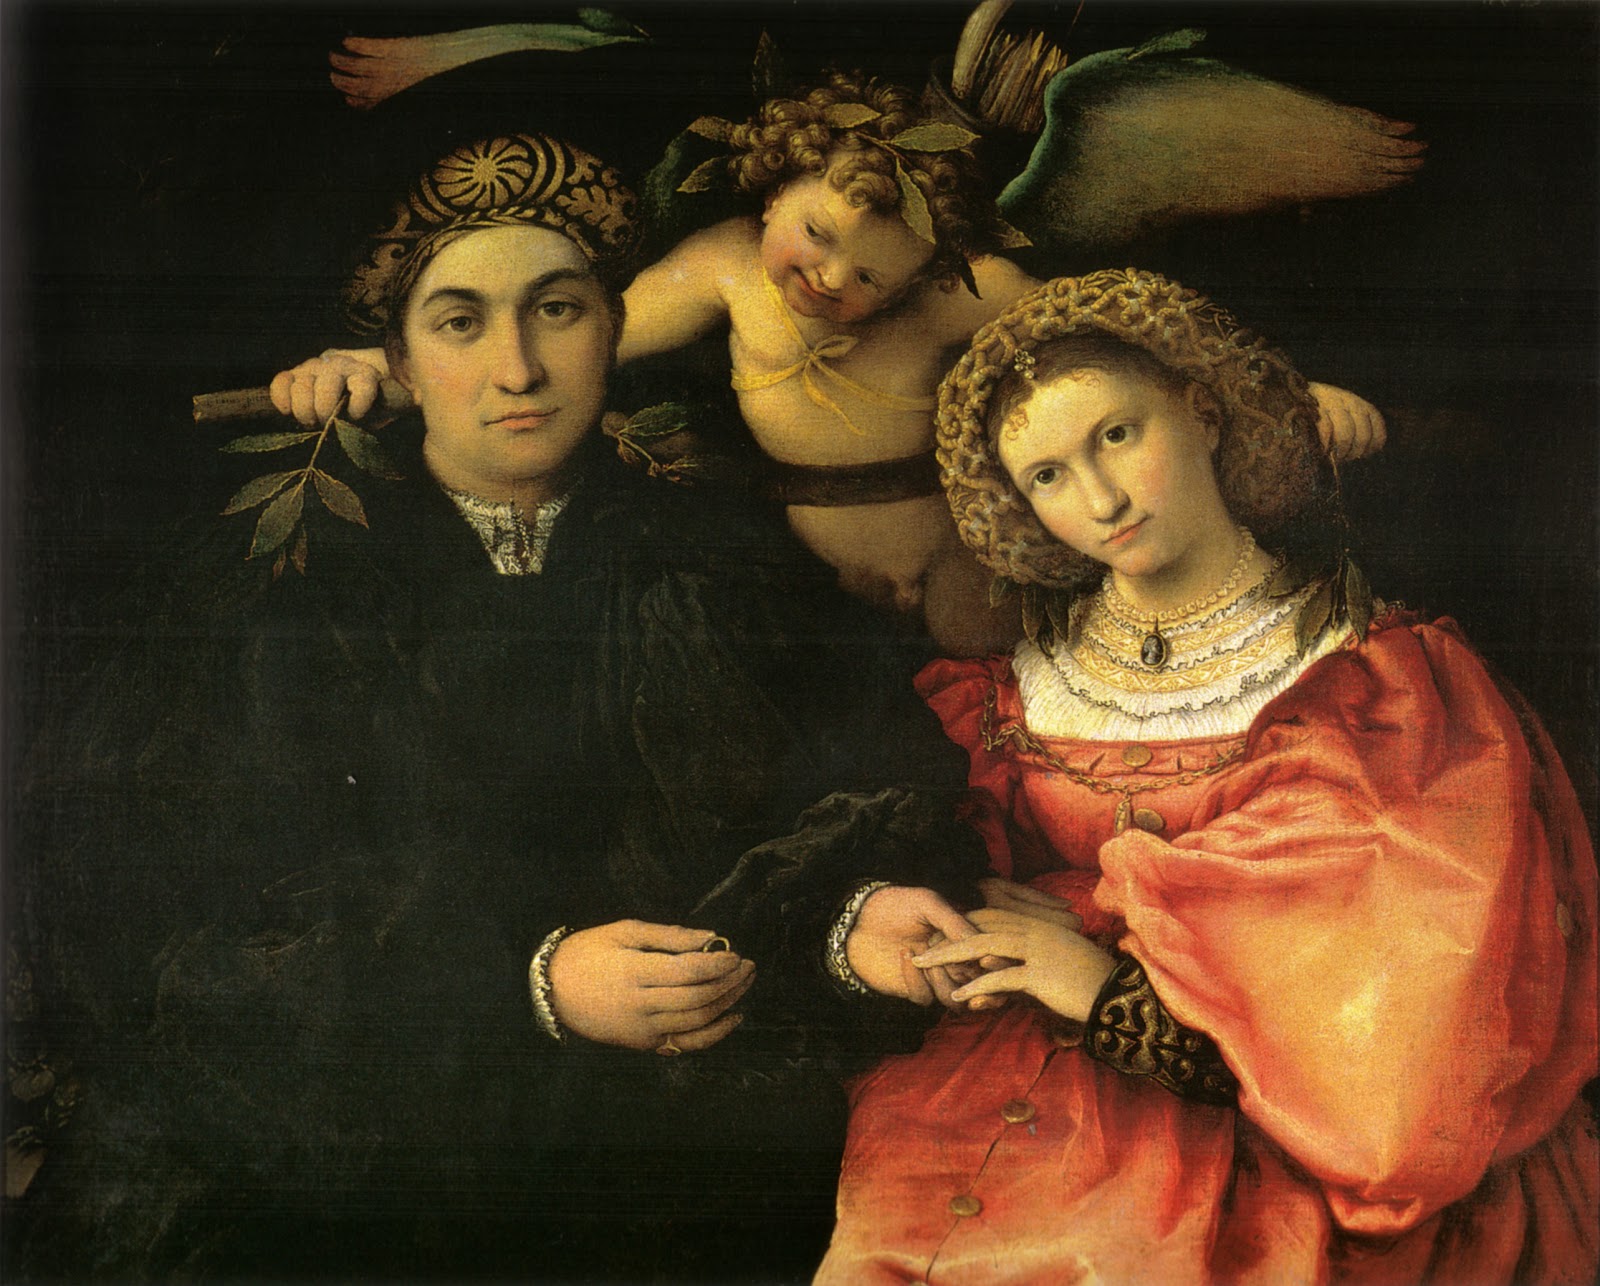 Lorenzo+Lotto-1480-1557 (102).jpg